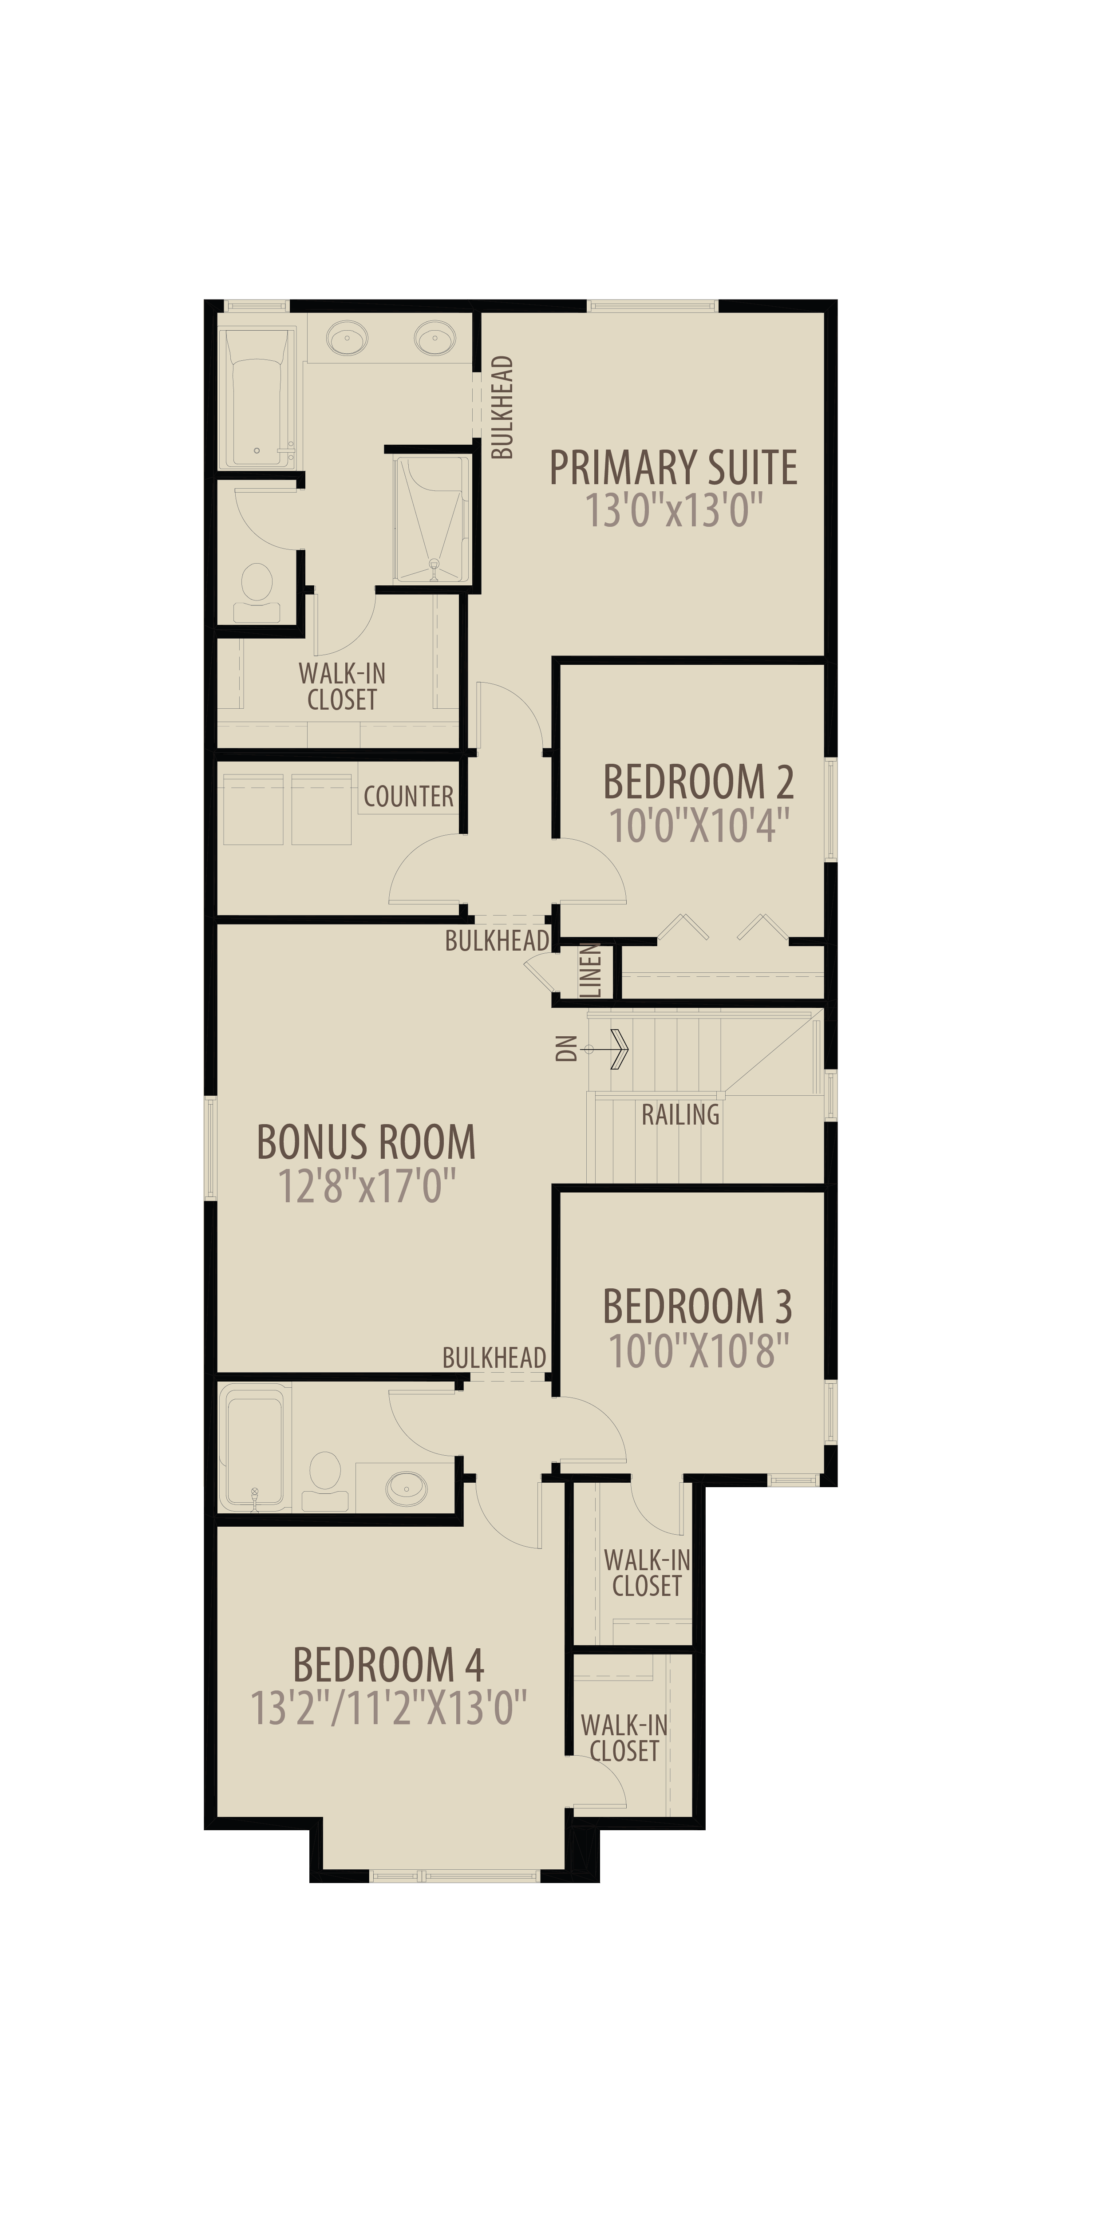 Option 7 4th Bed Central Bonus Room Adds 224 sq ft